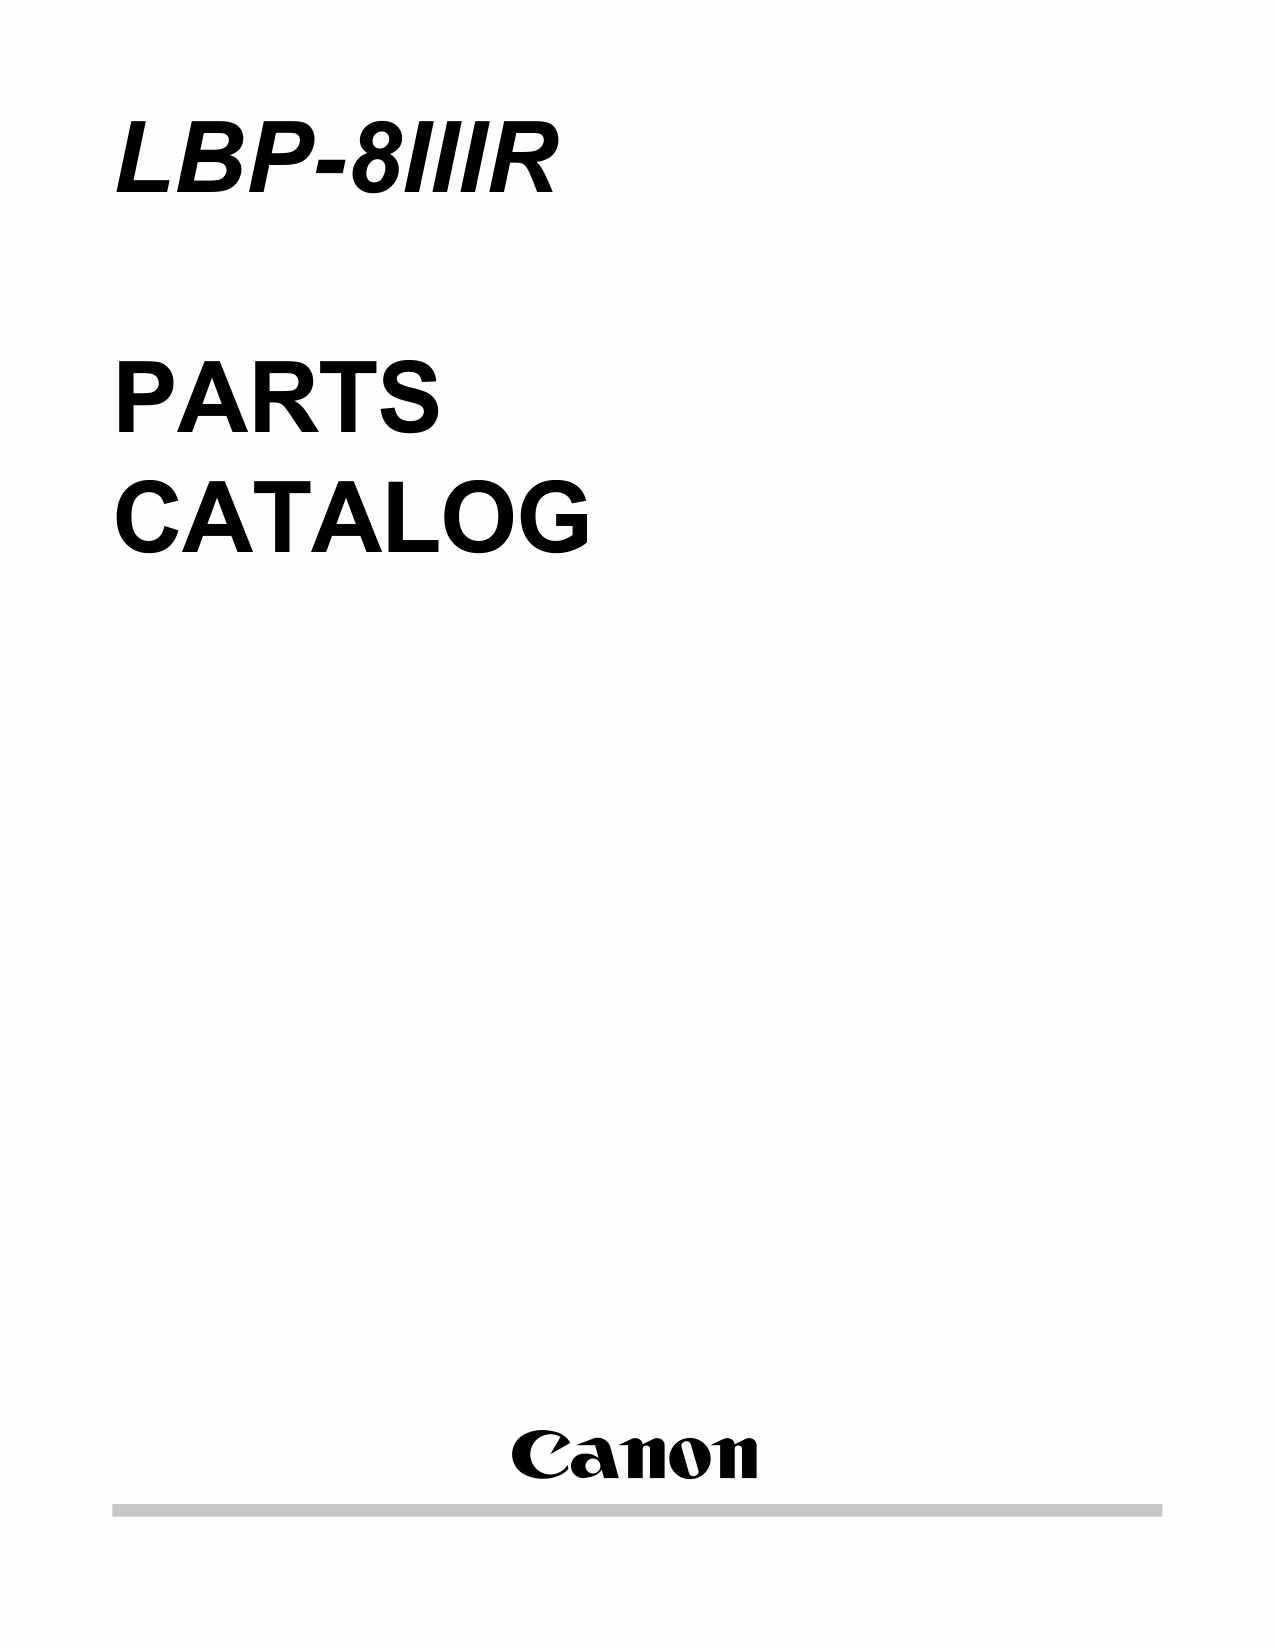 Canon imageCLASS LBP-8IIIR Parts Catalog Manual-1